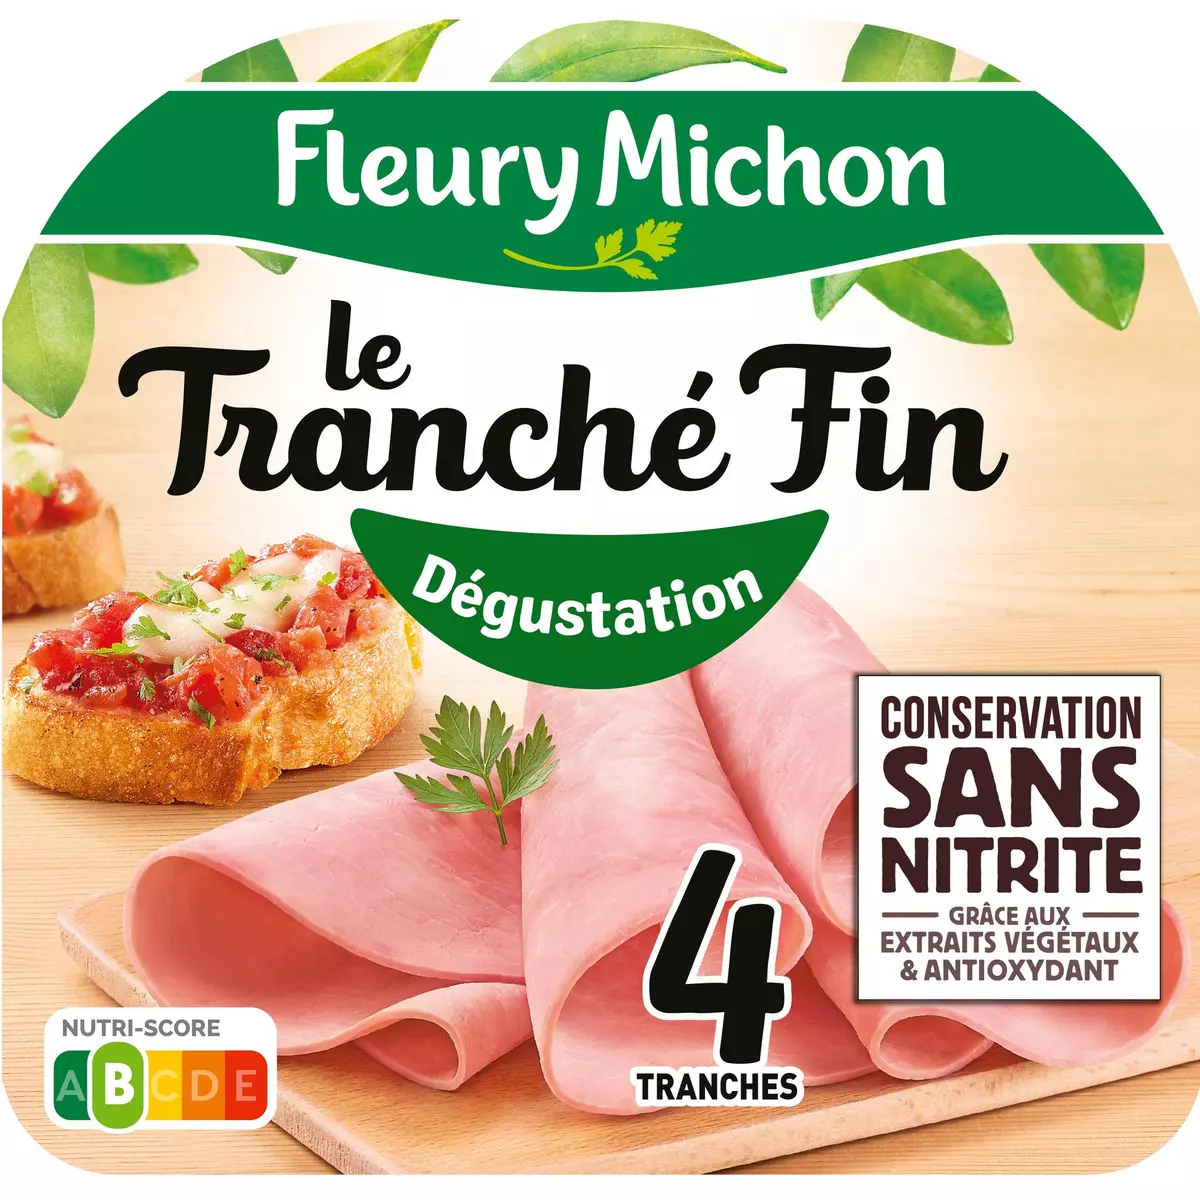 FLEURY MICHON Jambon tranché fin dégustation sans nitrite 4 tranches 120g